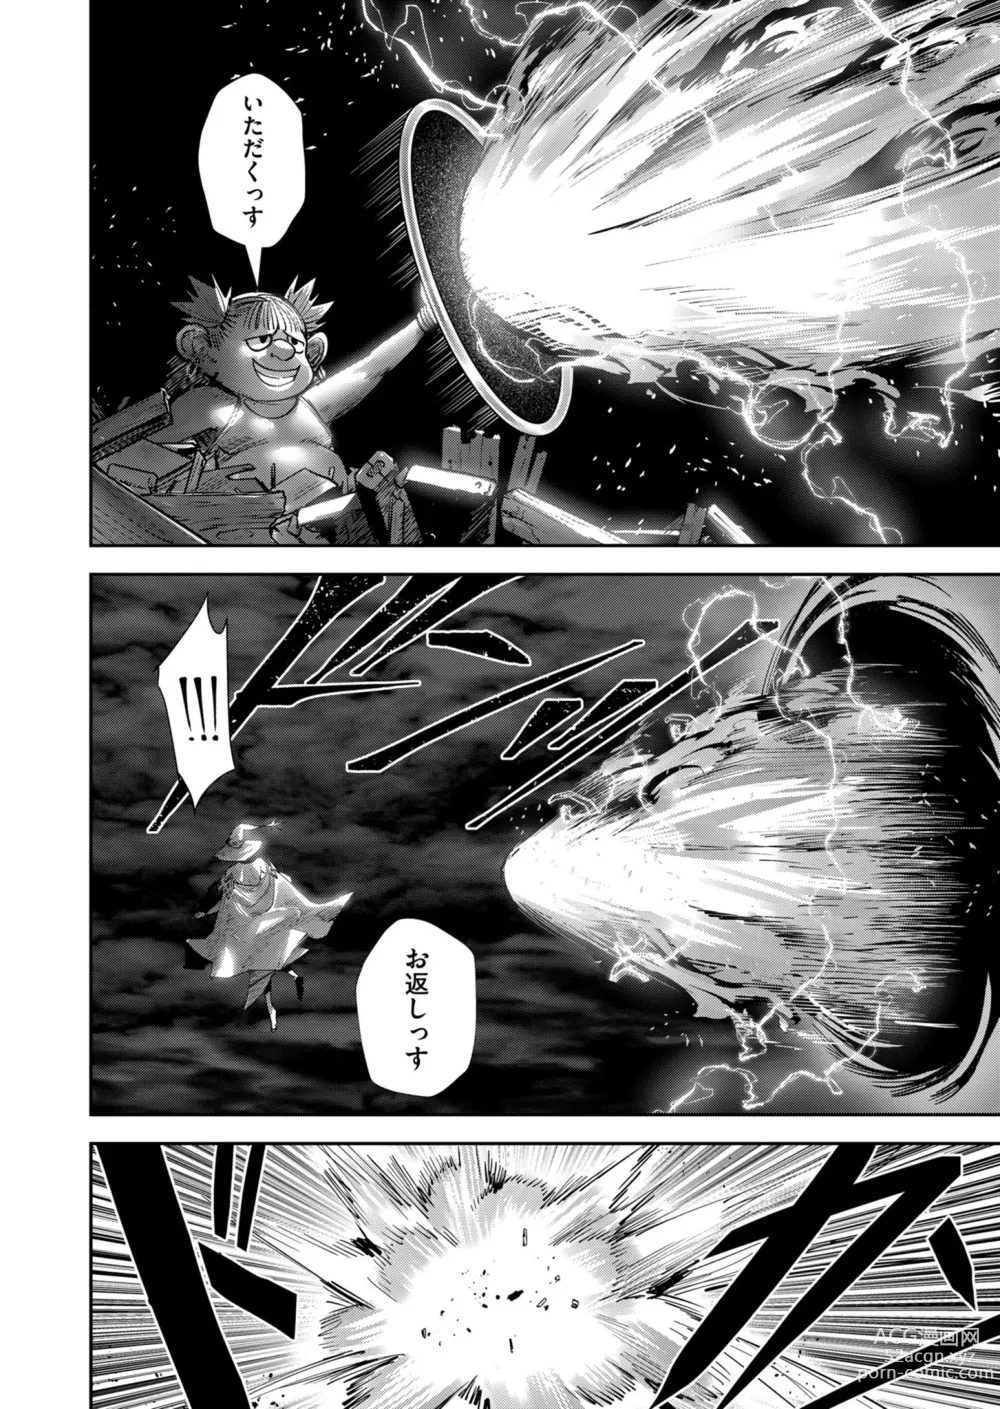 Page 156 of manga Kichiku Eiyuu Vol.04